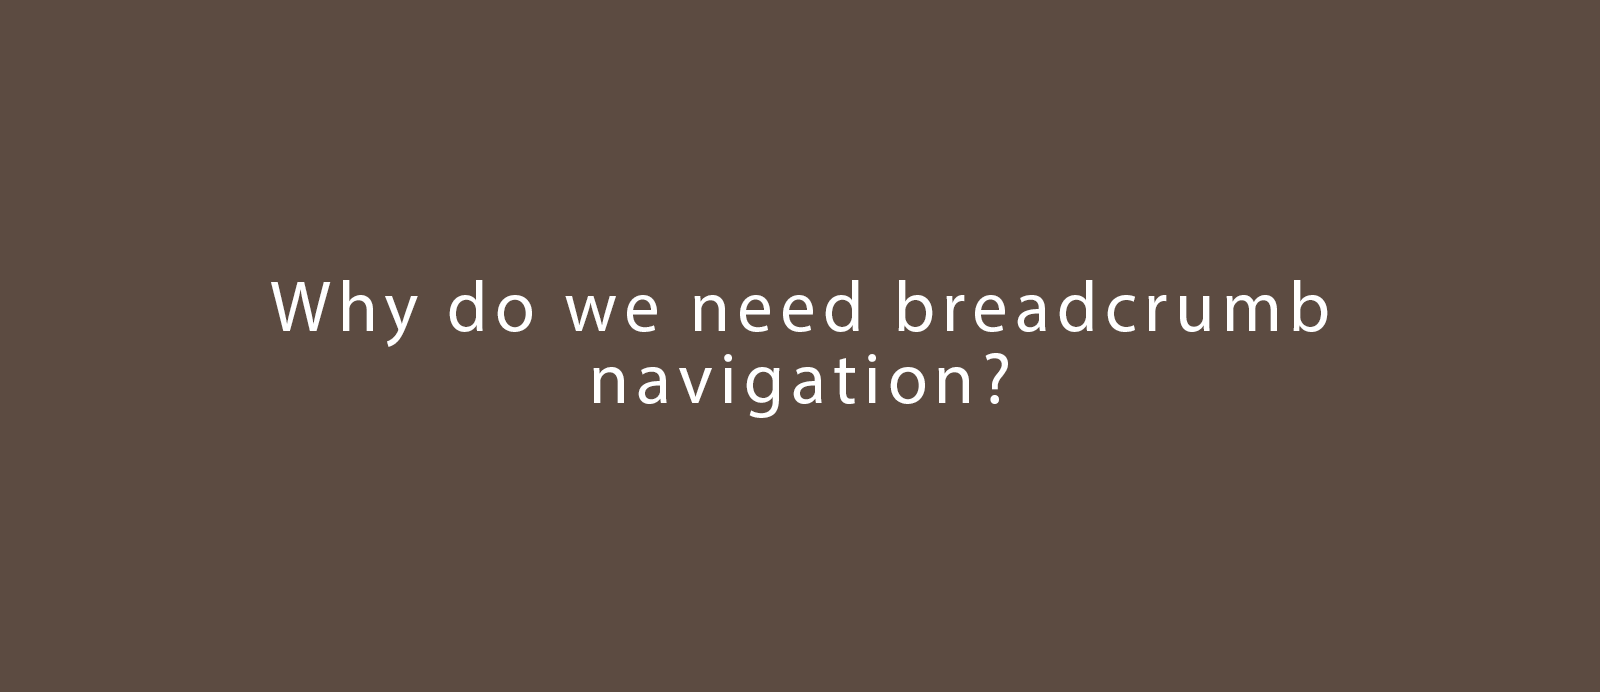 Why do we need breadcrumb navigation